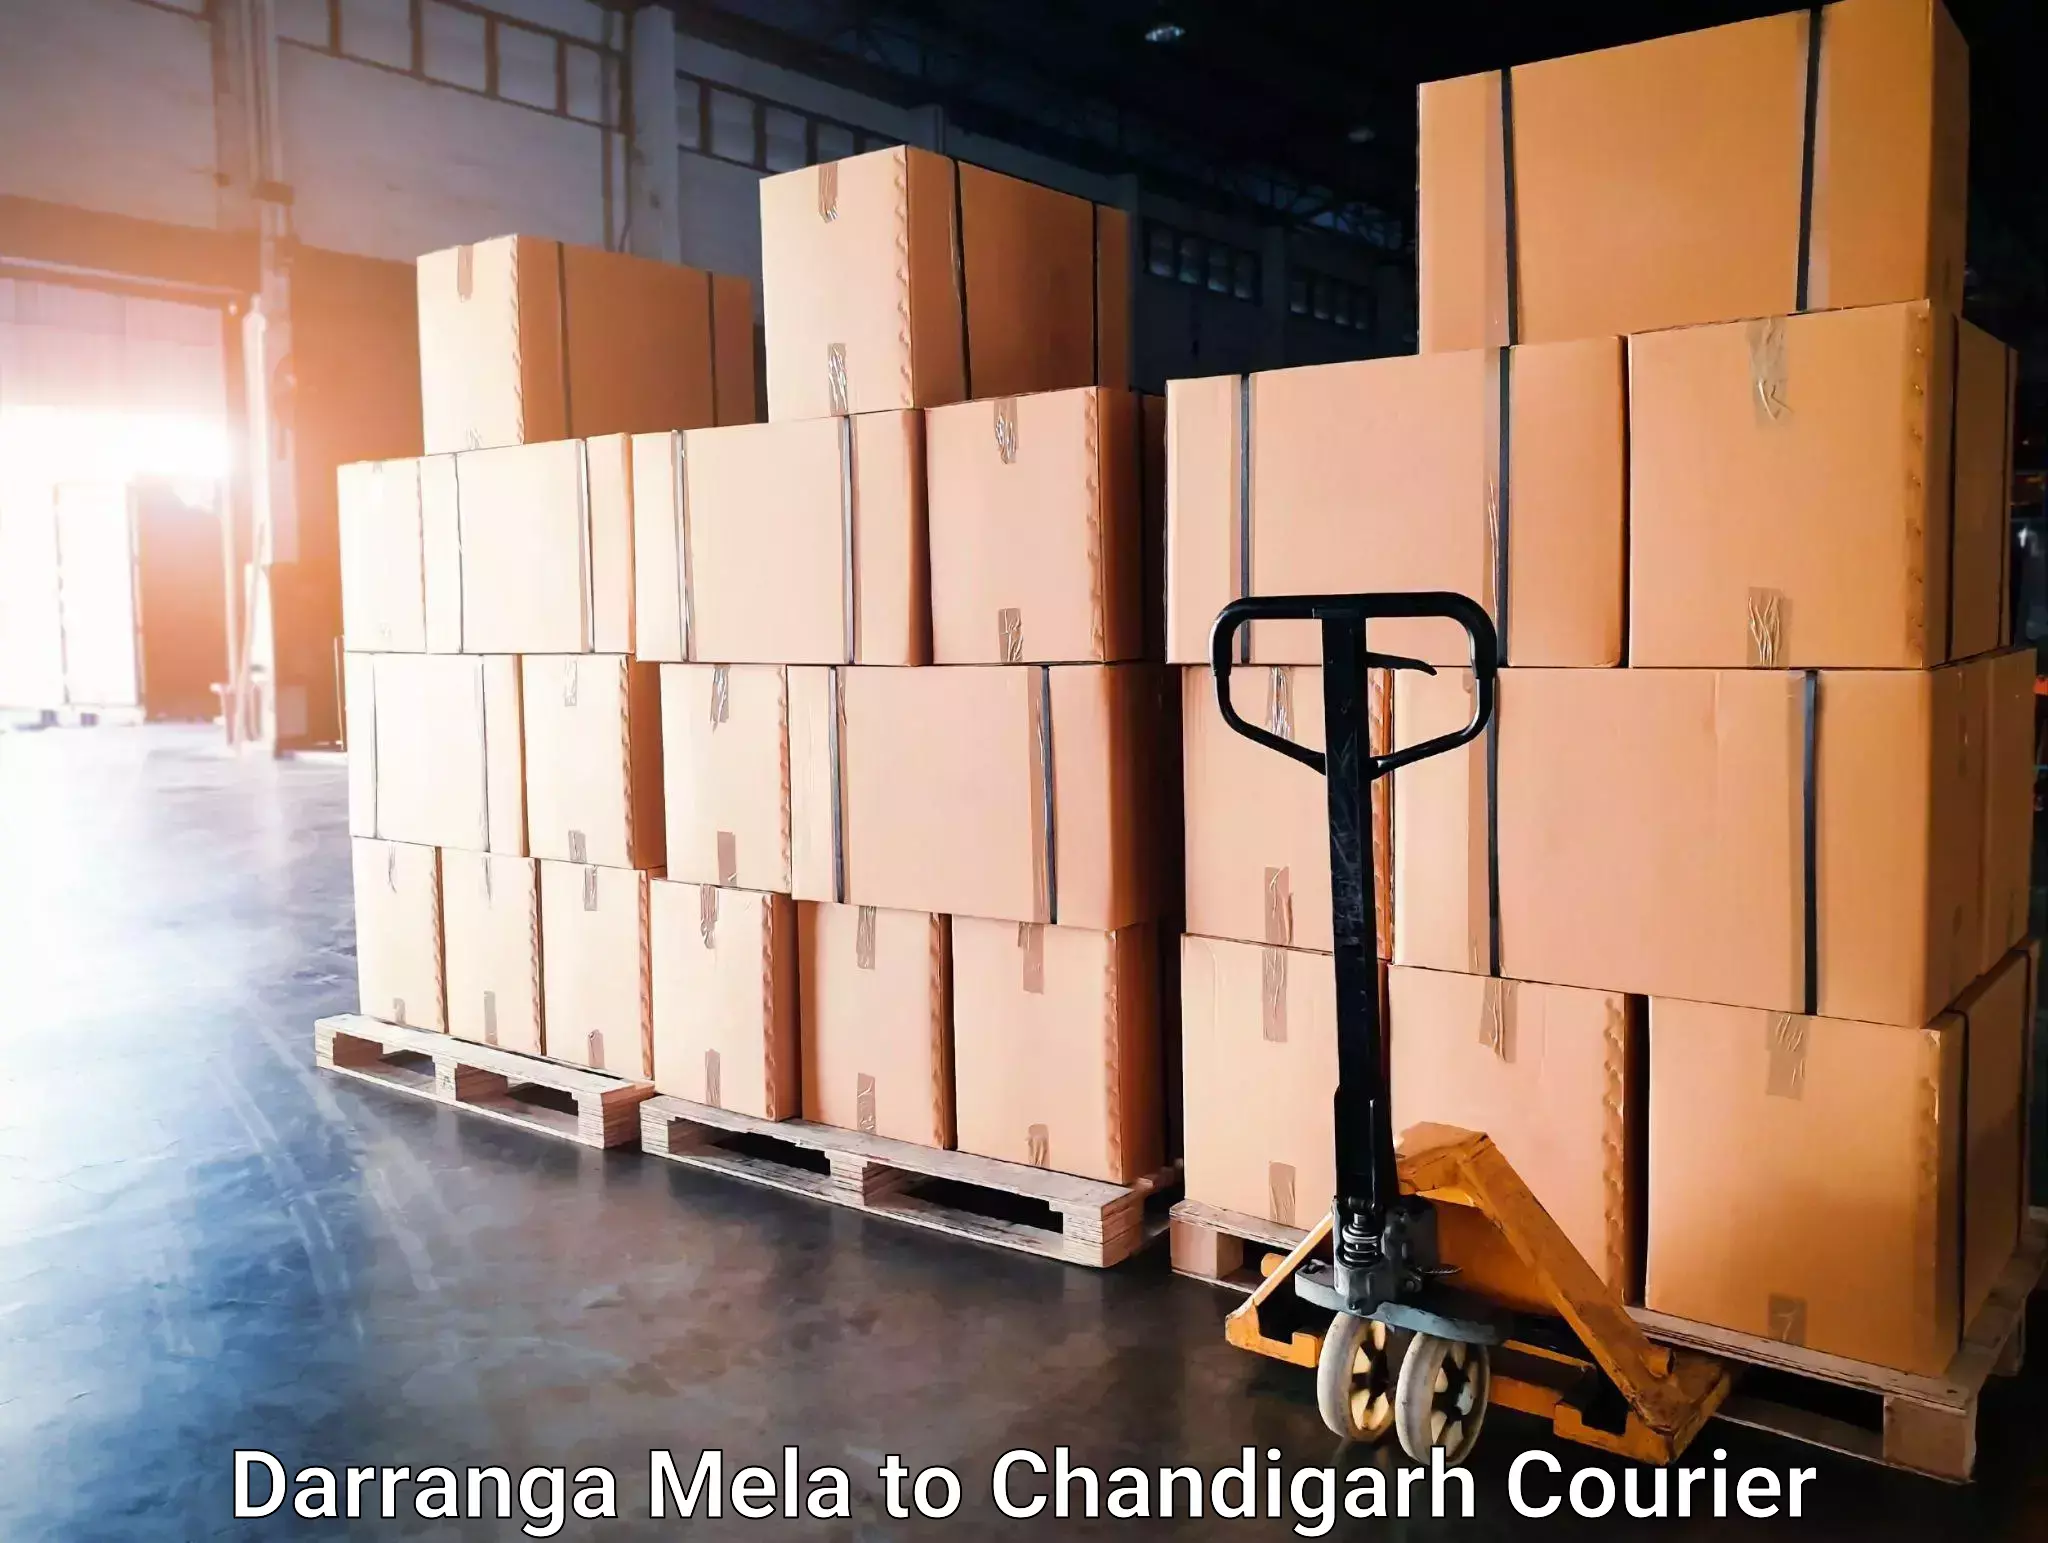 Express package handling Darranga Mela to Chandigarh